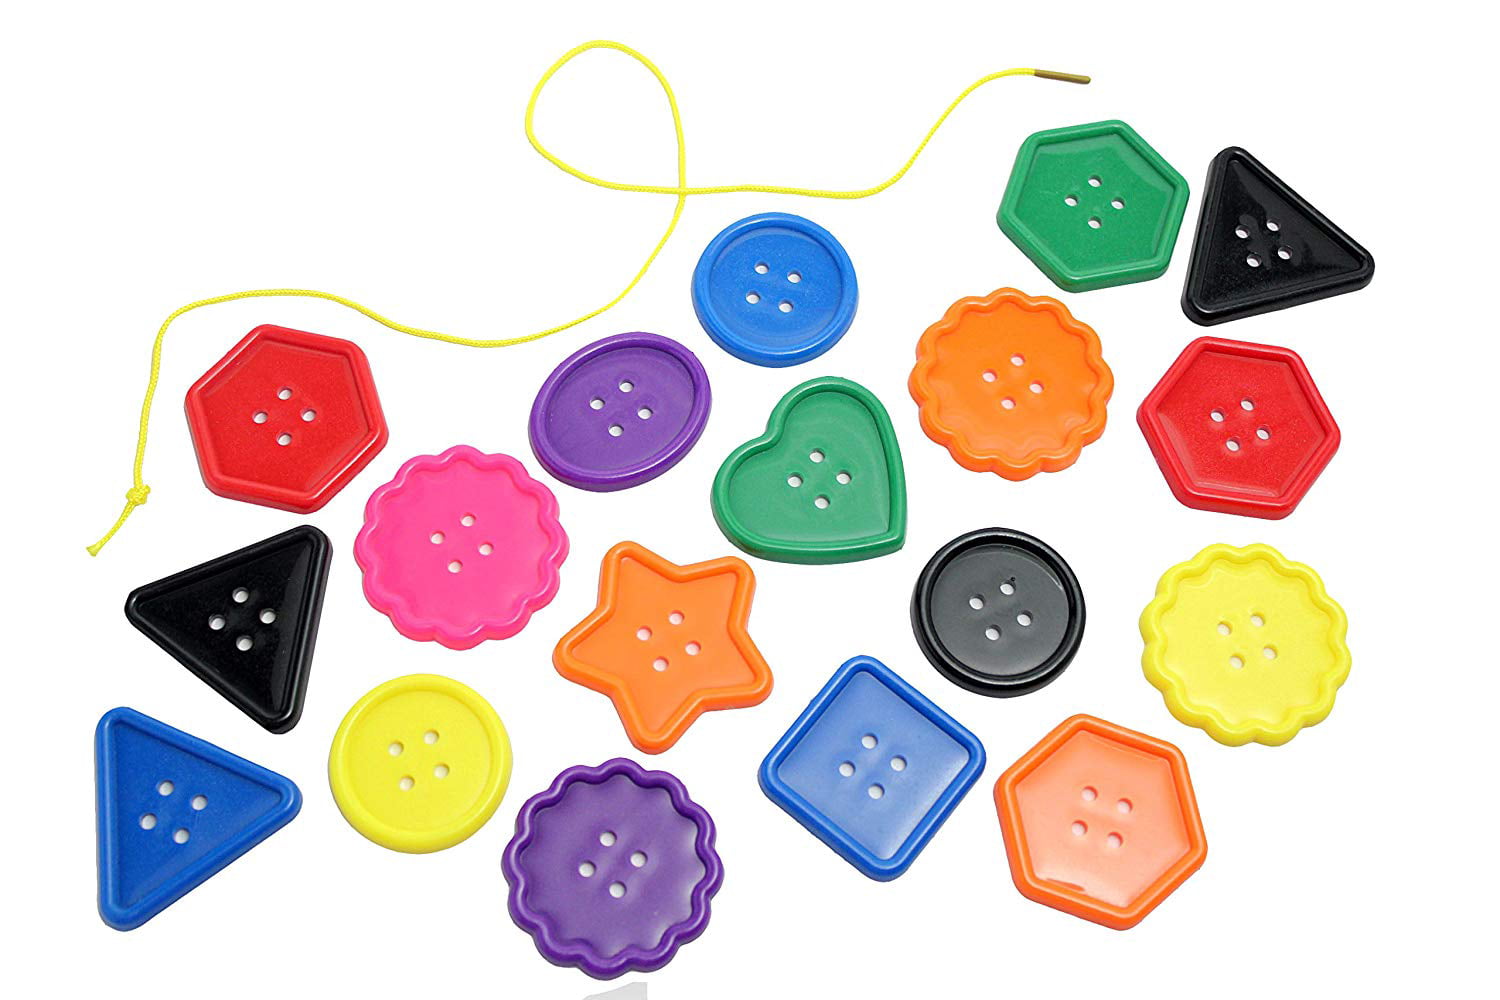 ARNIYAVALA Big Button Lacing Puzzle Toy, Big Button Threading Toy for Kids  - Big Button Lacing Puzzle Toy, Big Button Threading Toy for Kids . shop  for ARNIYAVALA products in India.